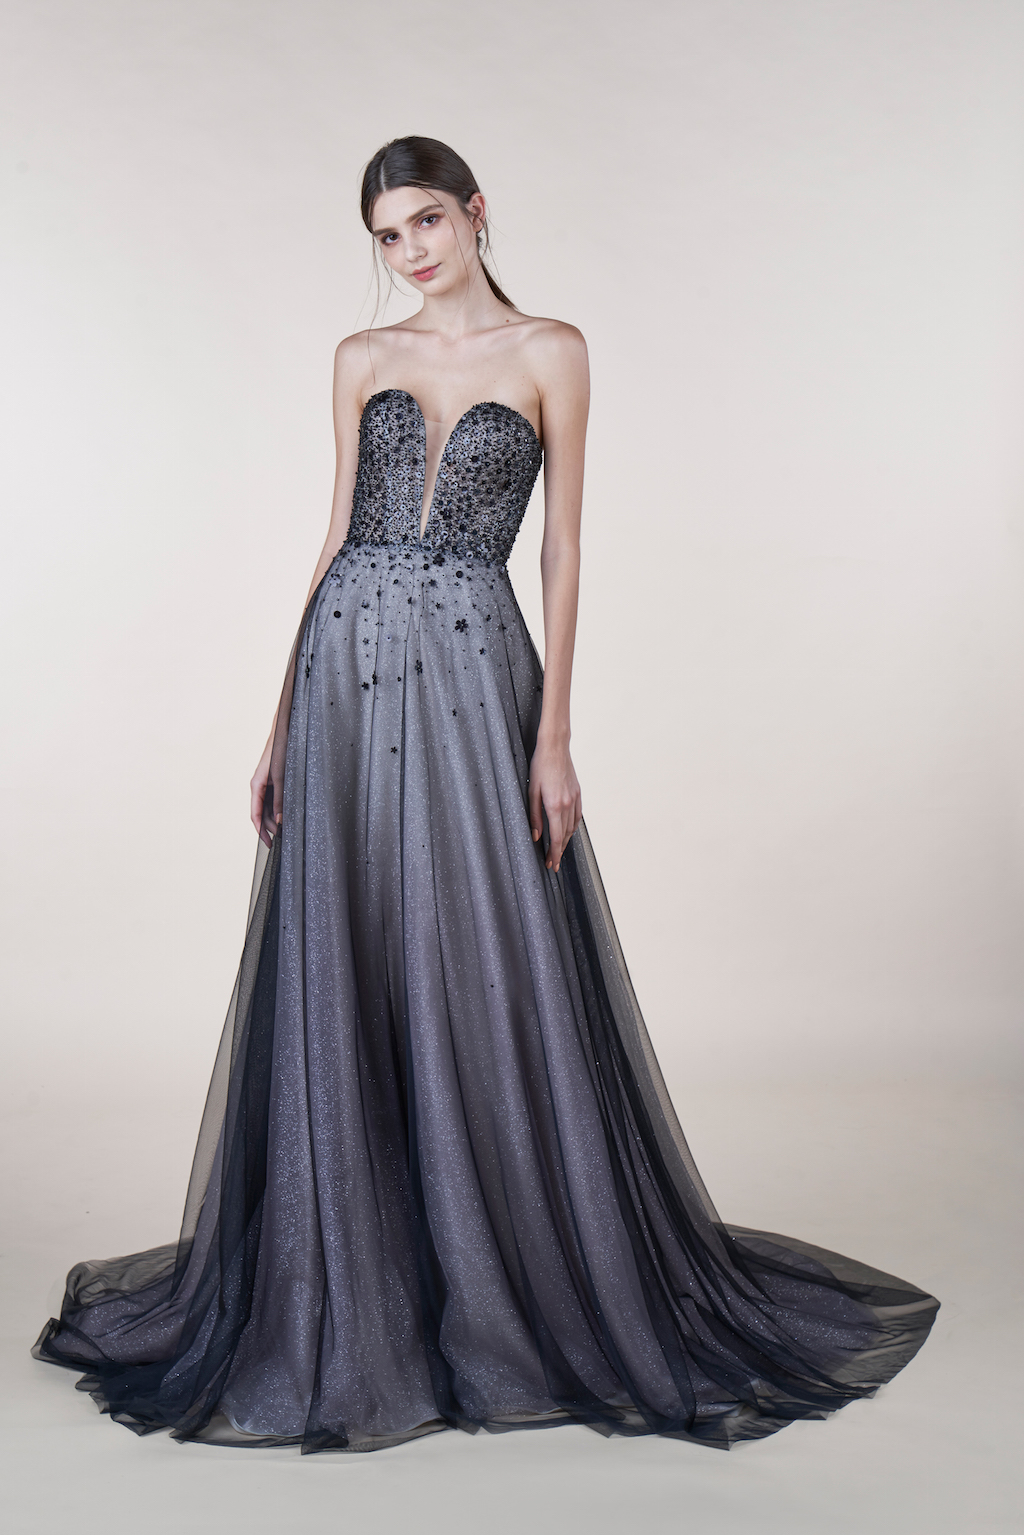 Dress  Gown Hire Perth  Affordable Designer Ball Dress Rental Perth